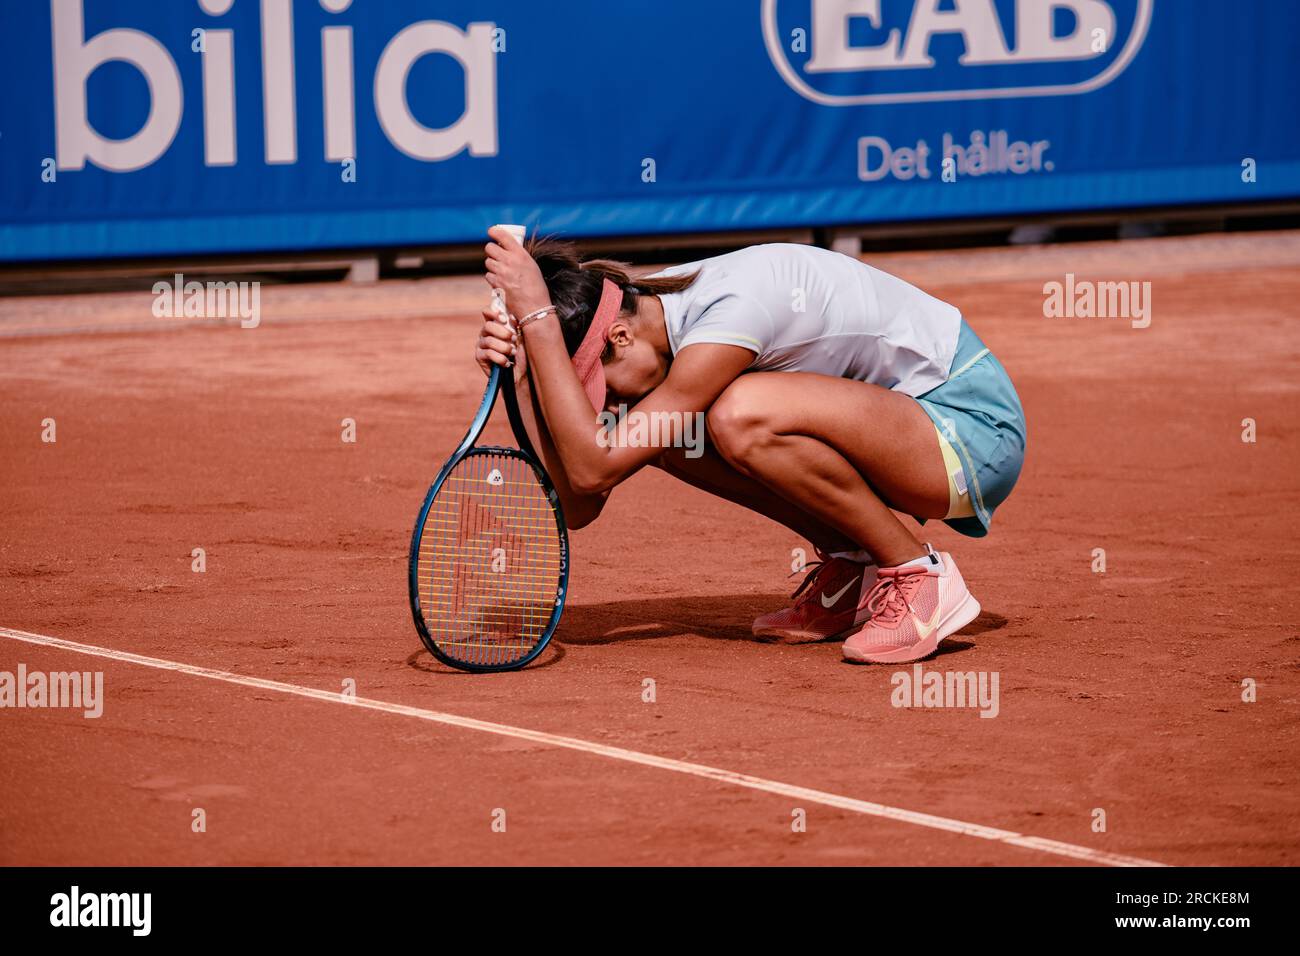 Båstad, Sweden. 07 15 2023. Olga Danilovic against Emma Navarro final Nordea Open 2023. Olga Danilovic won. Daniel Bengtsson / Alamy News Stock Photo